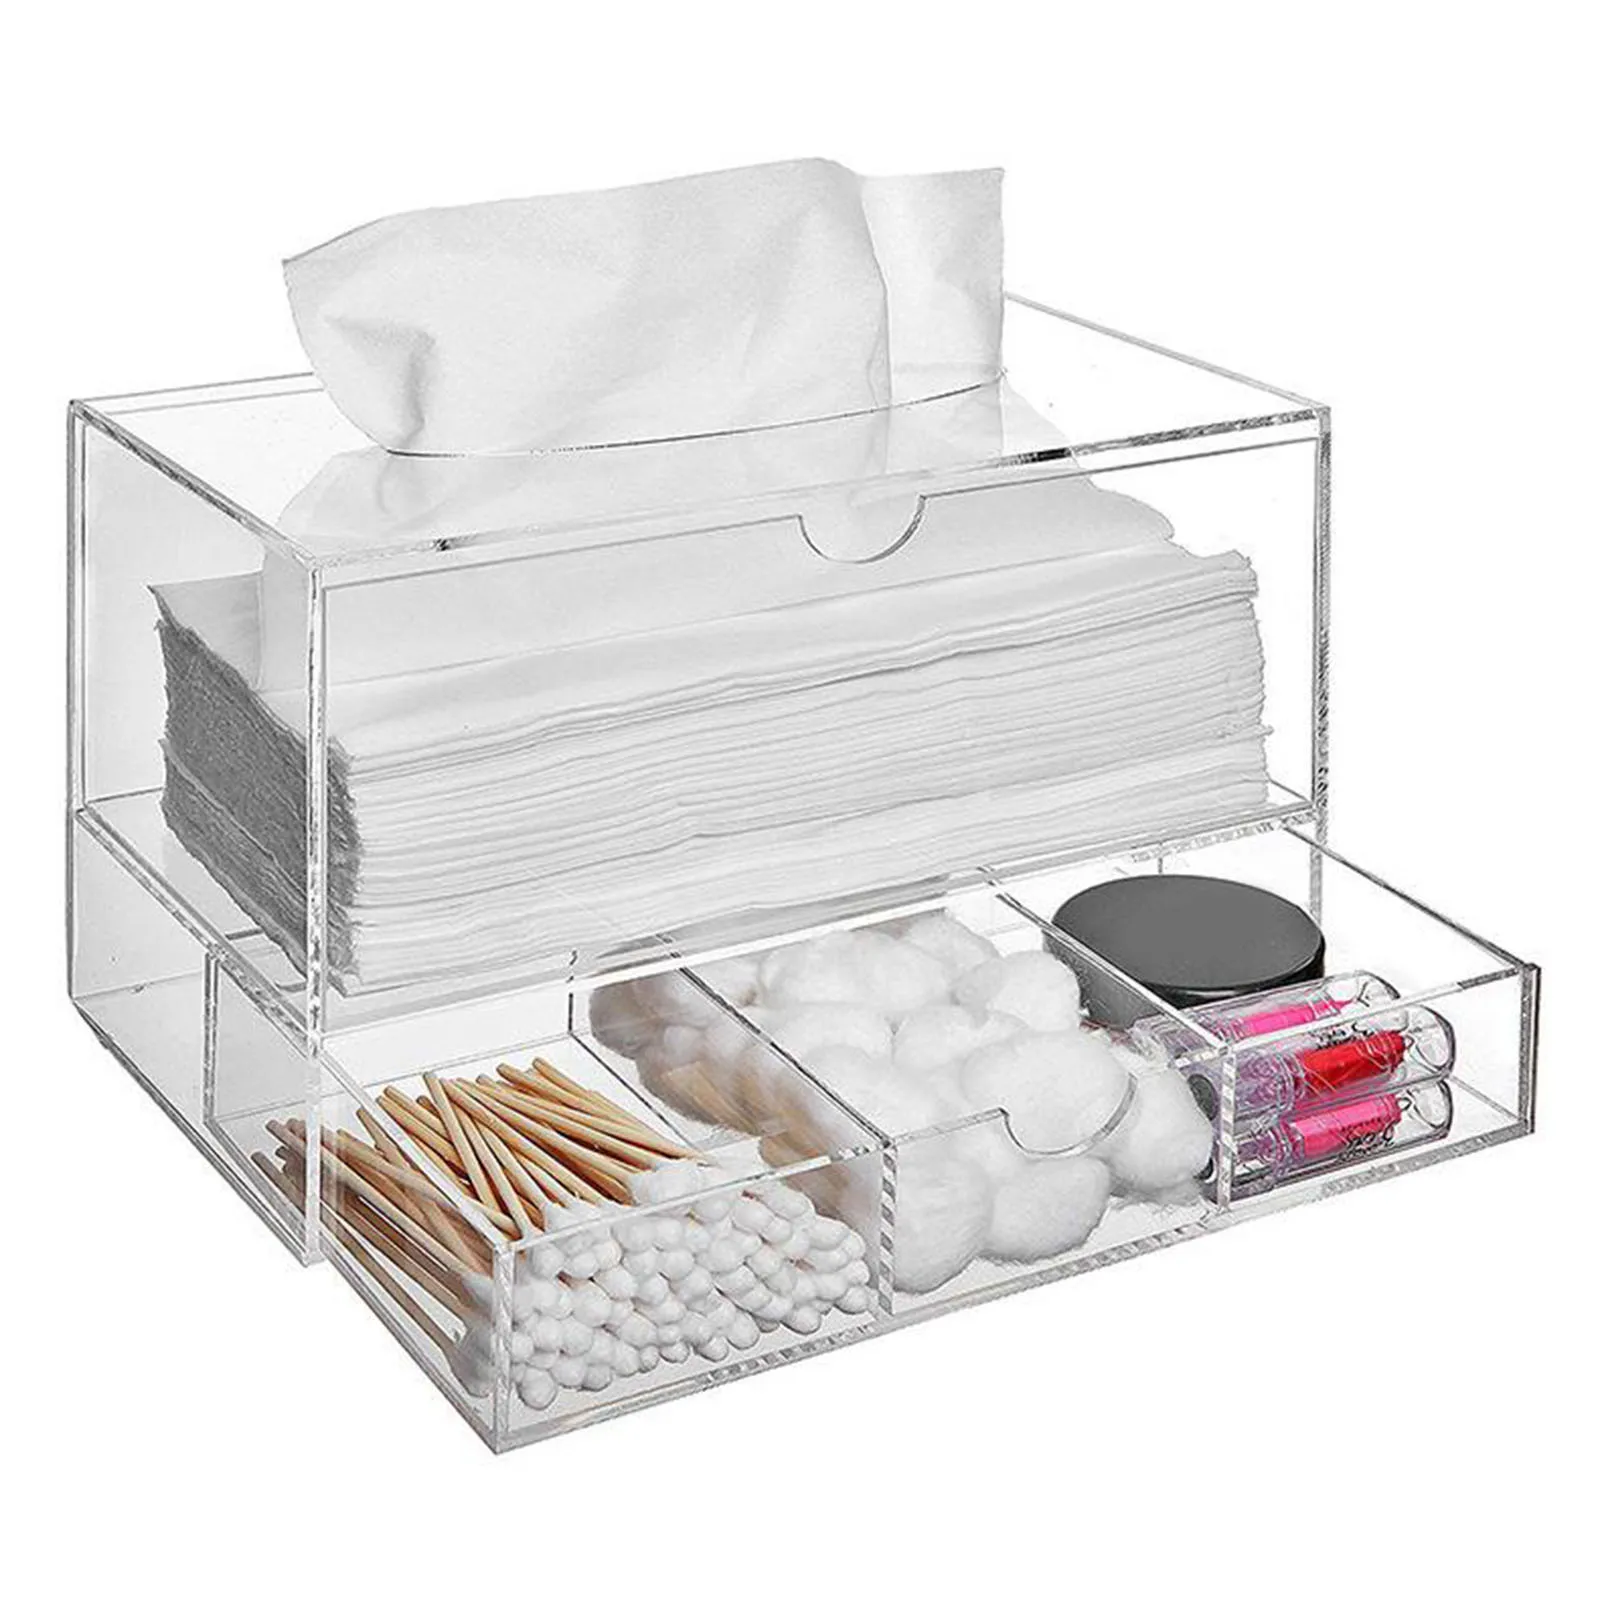 New Acrylic Cosmetic Makeup Organizer Shelf Rack Drawers Storage Box Display